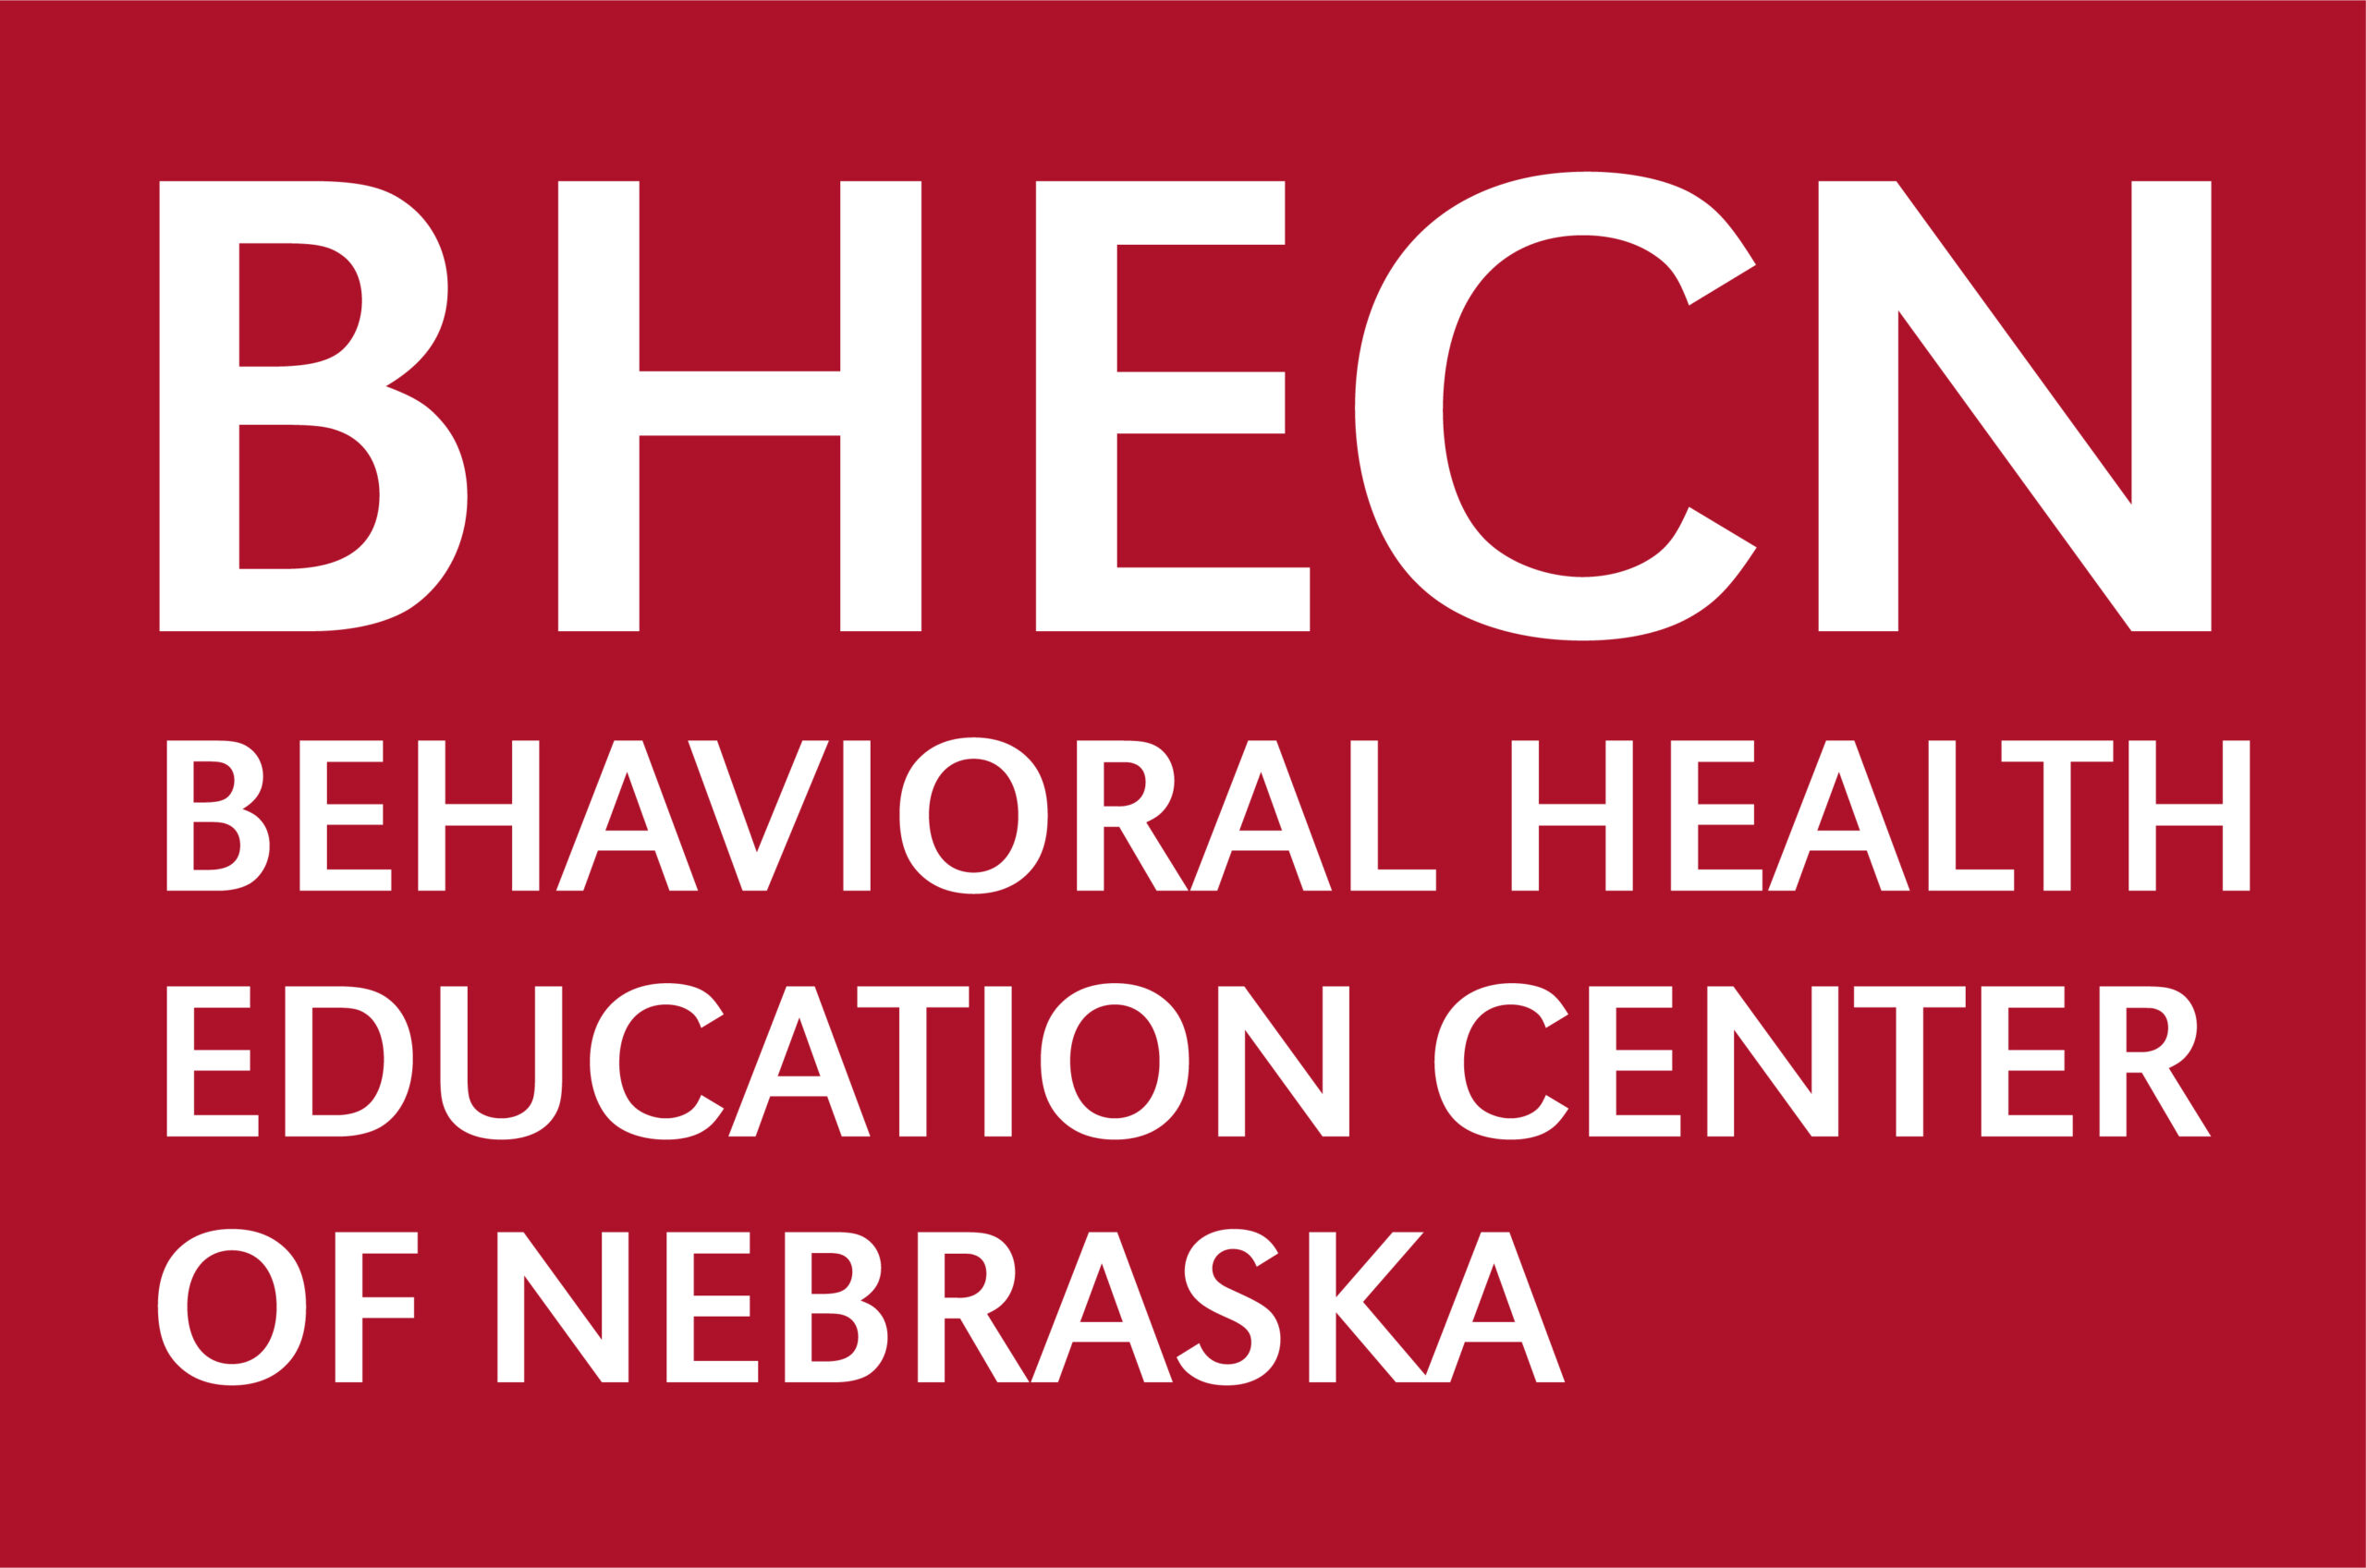 BHECN Logo